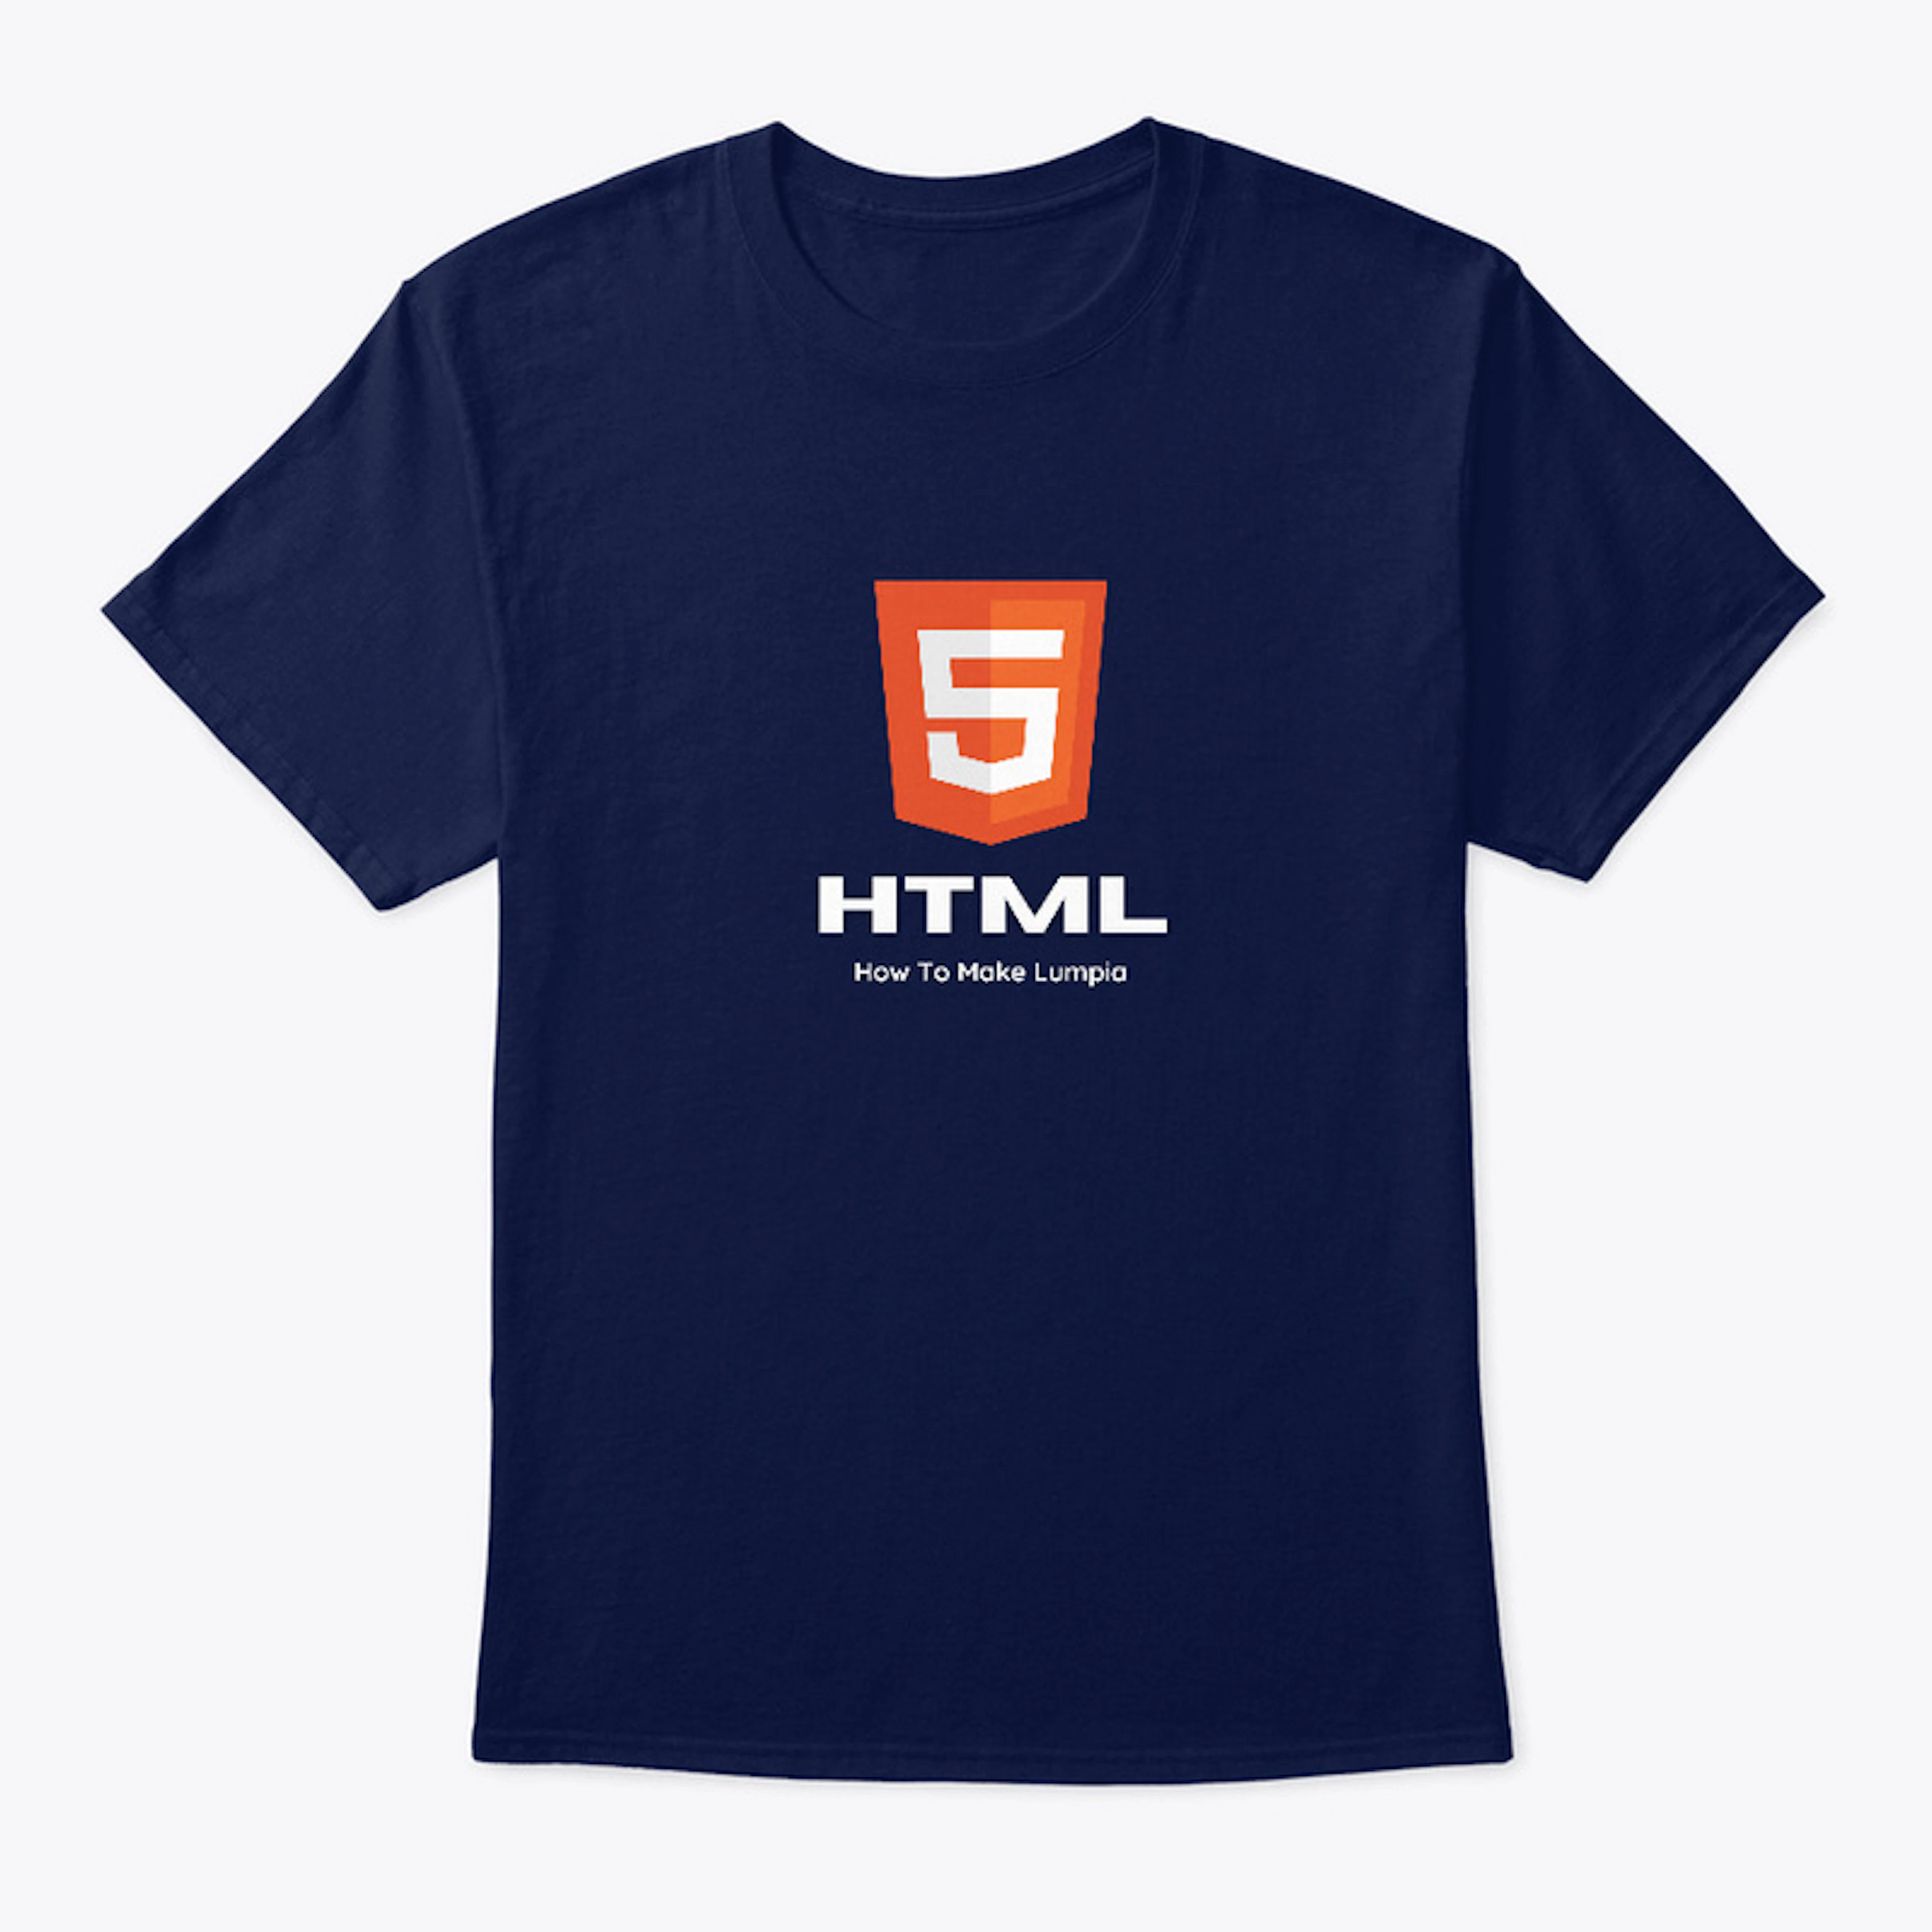 HTML - How To Make Lumpia